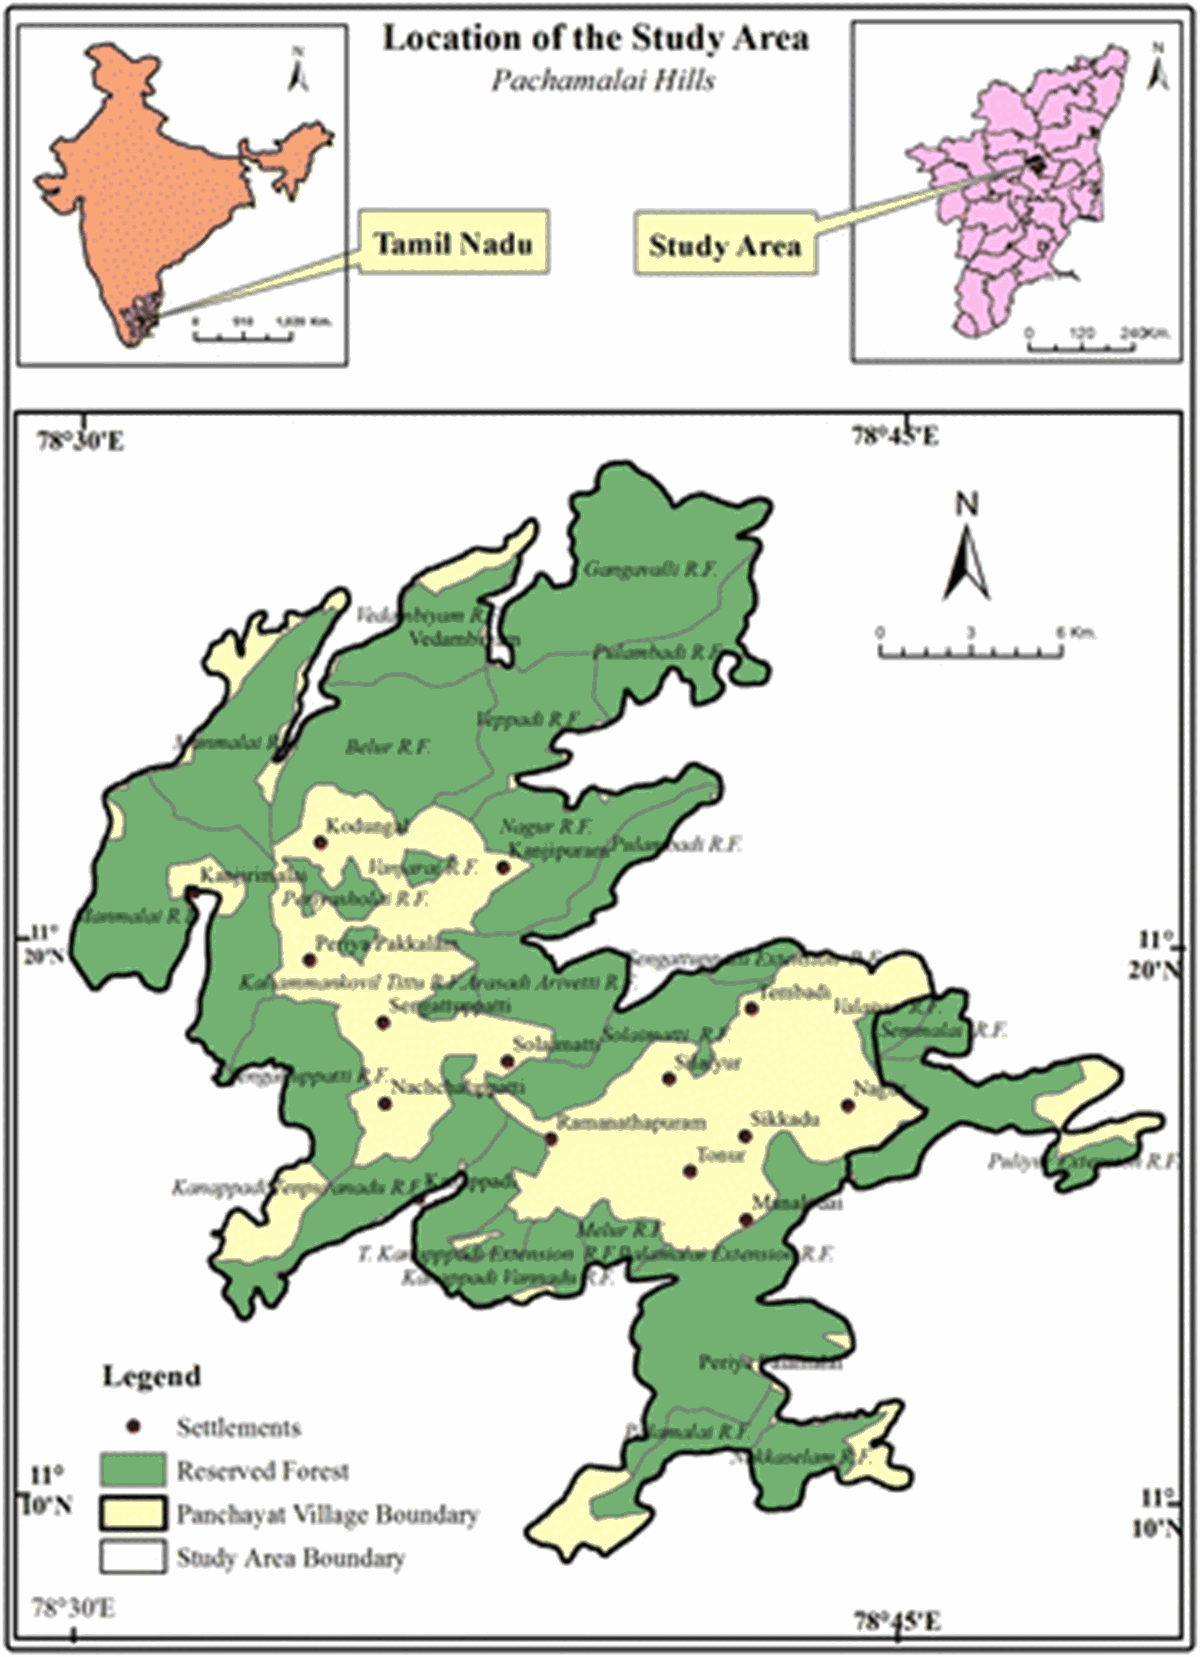 Geographic location of Pachamalai Hills, Tamil Nadu  (Adopted from Prabhakaran and Jawahar Raj, 2018)